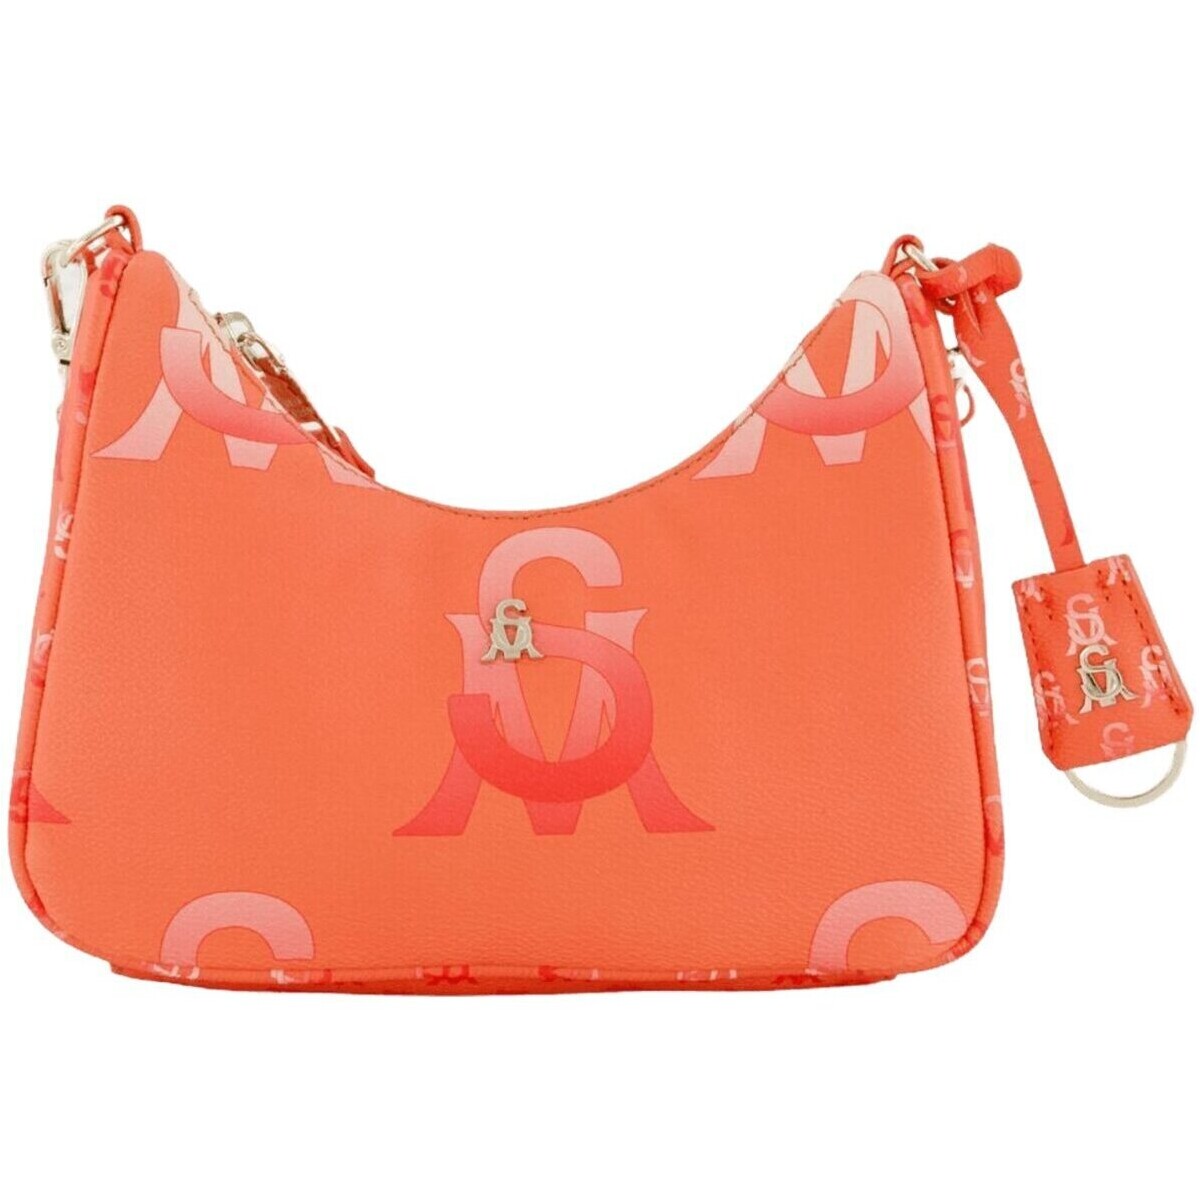 Taschen Damen Handtasche Steve Madden Mode Accessoires Bvital-2 SM13001450-ORG Orange